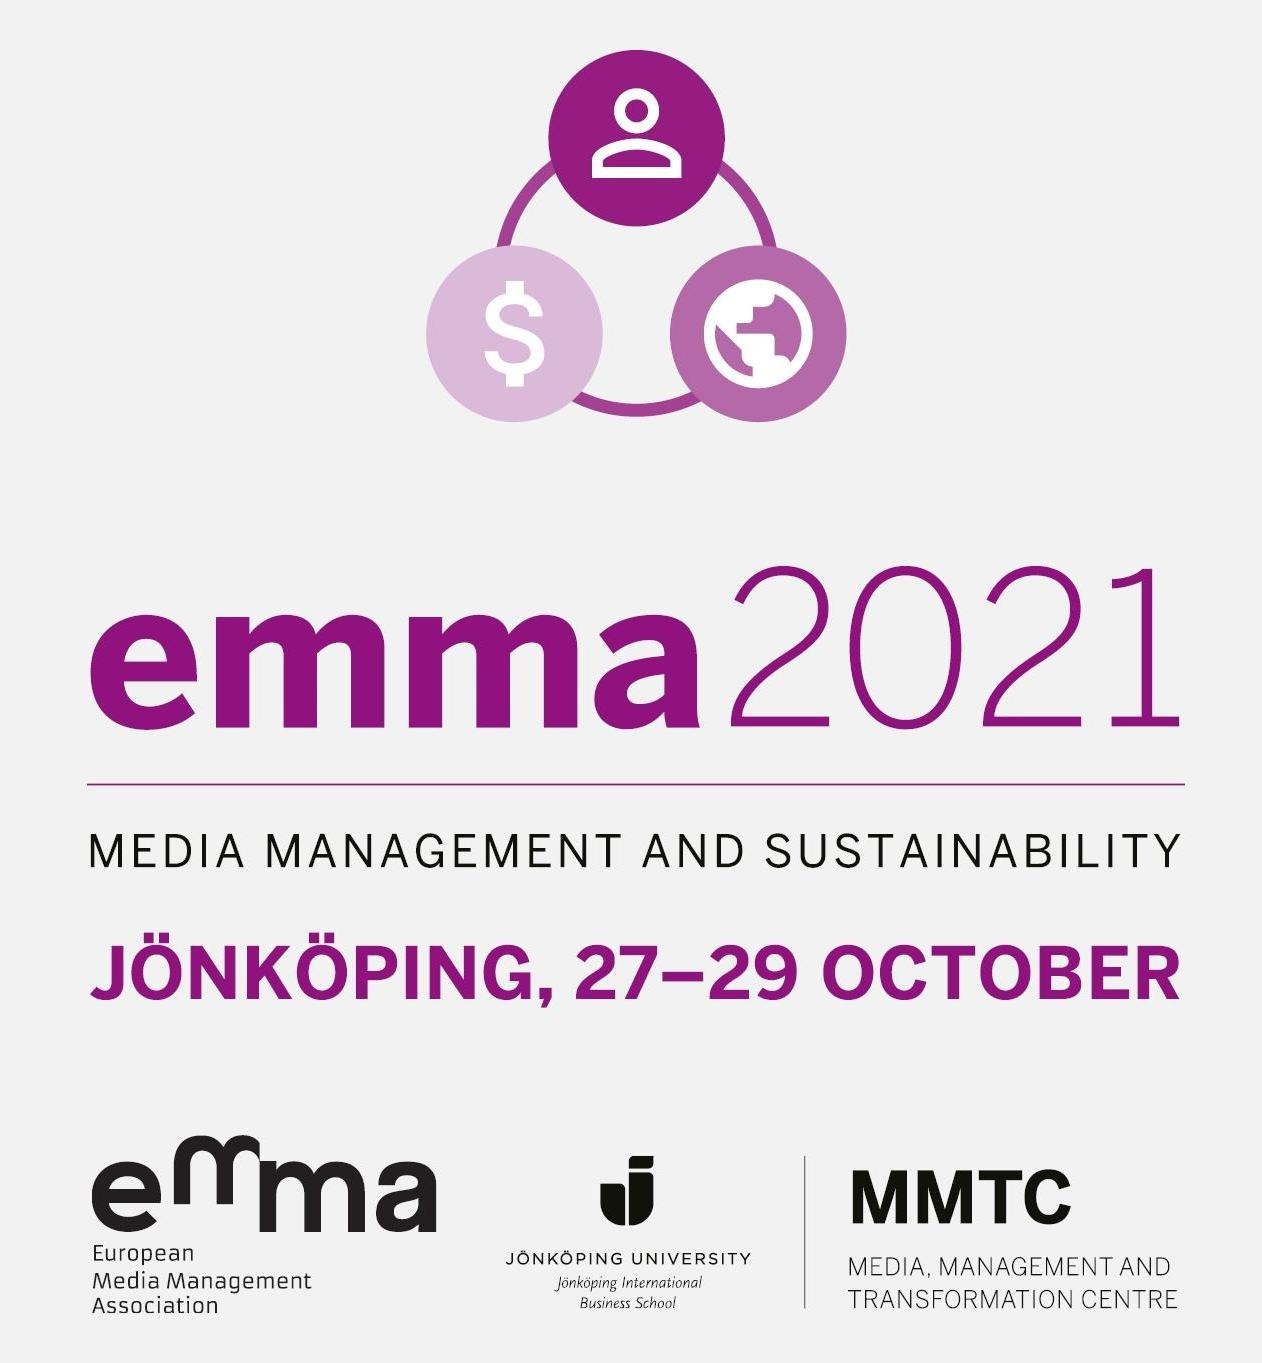 emma2021 logo